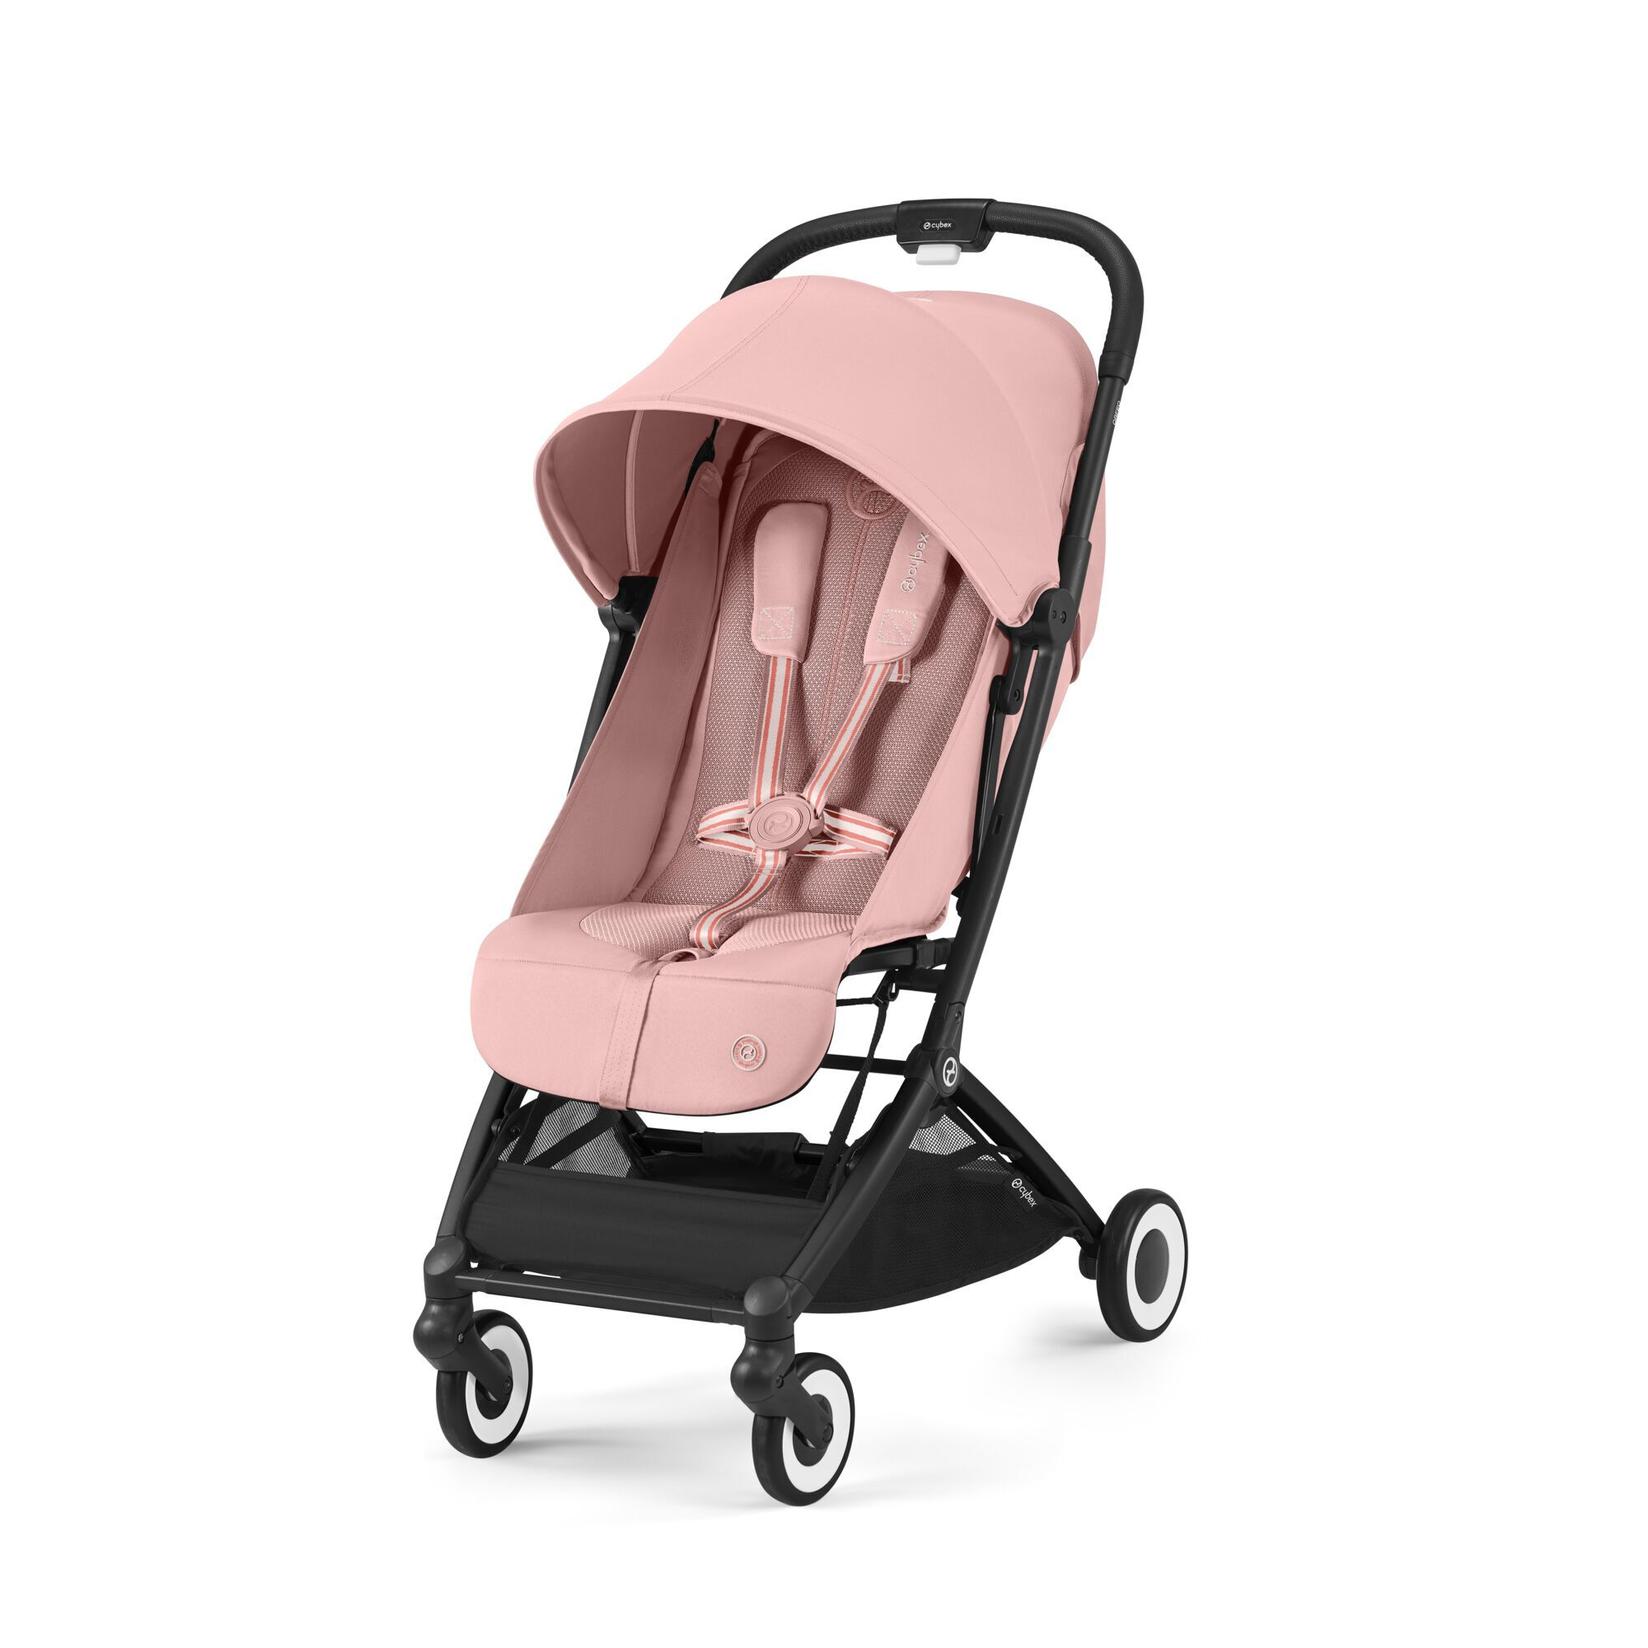 Selected image for Cybex Kolica za bebe Orfeo BLK Candy Pink, Roze